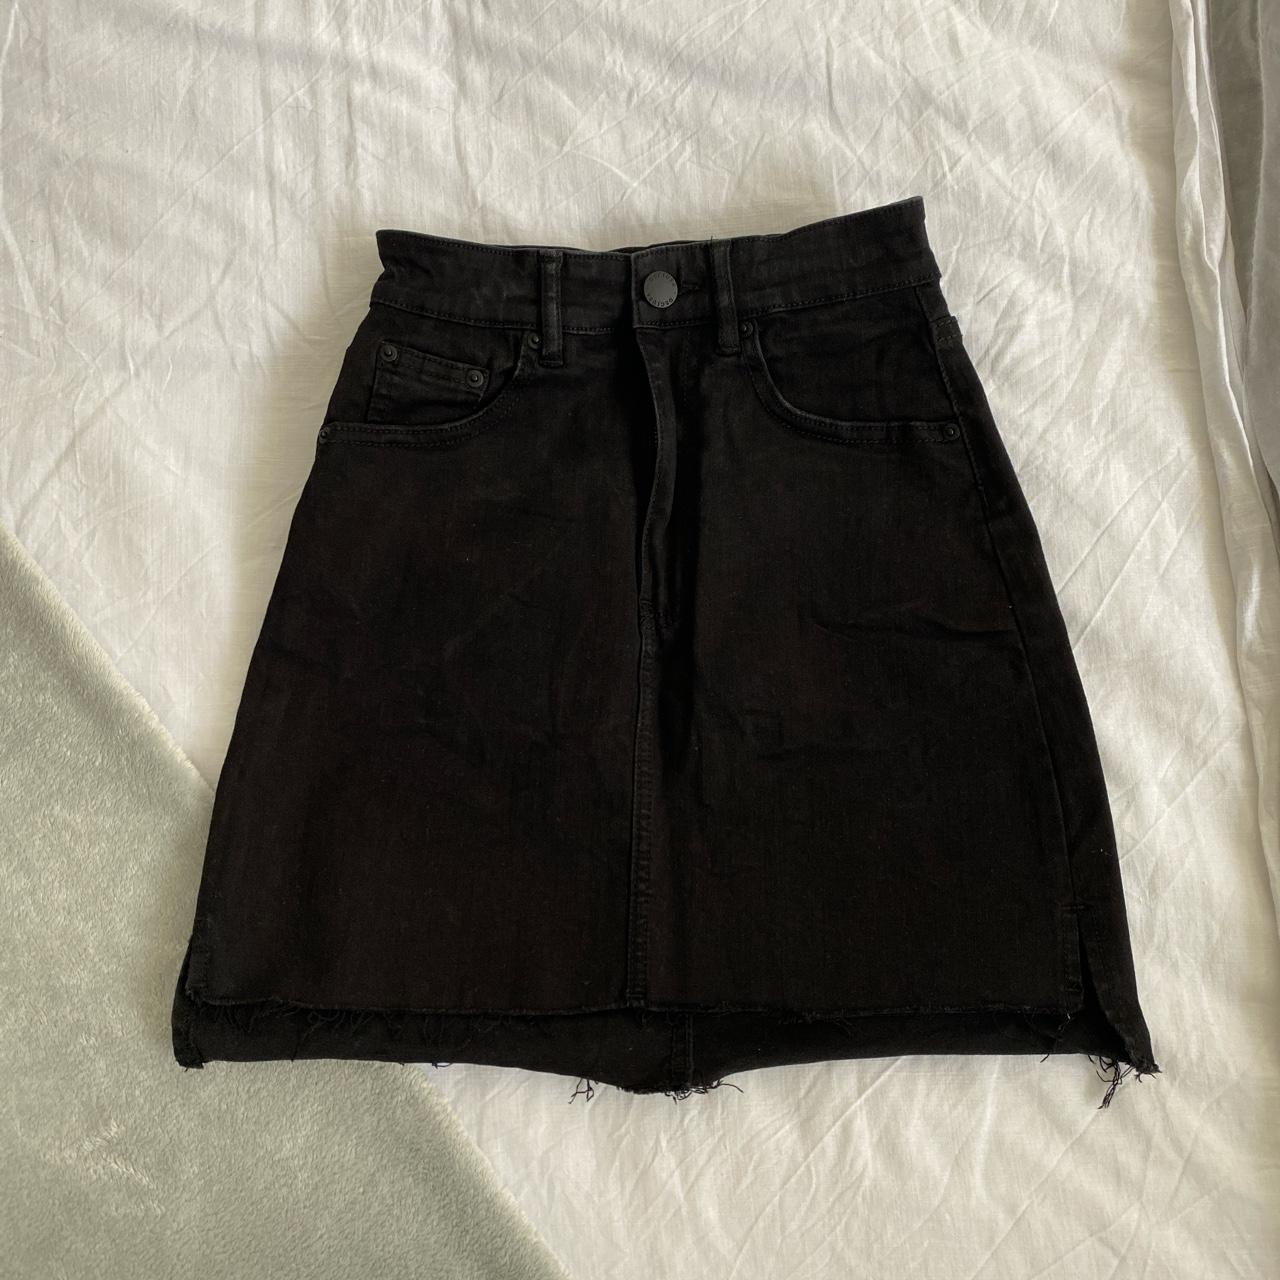 Black denim skirt Bought from decjuba SIZE 6 RRP... - Depop